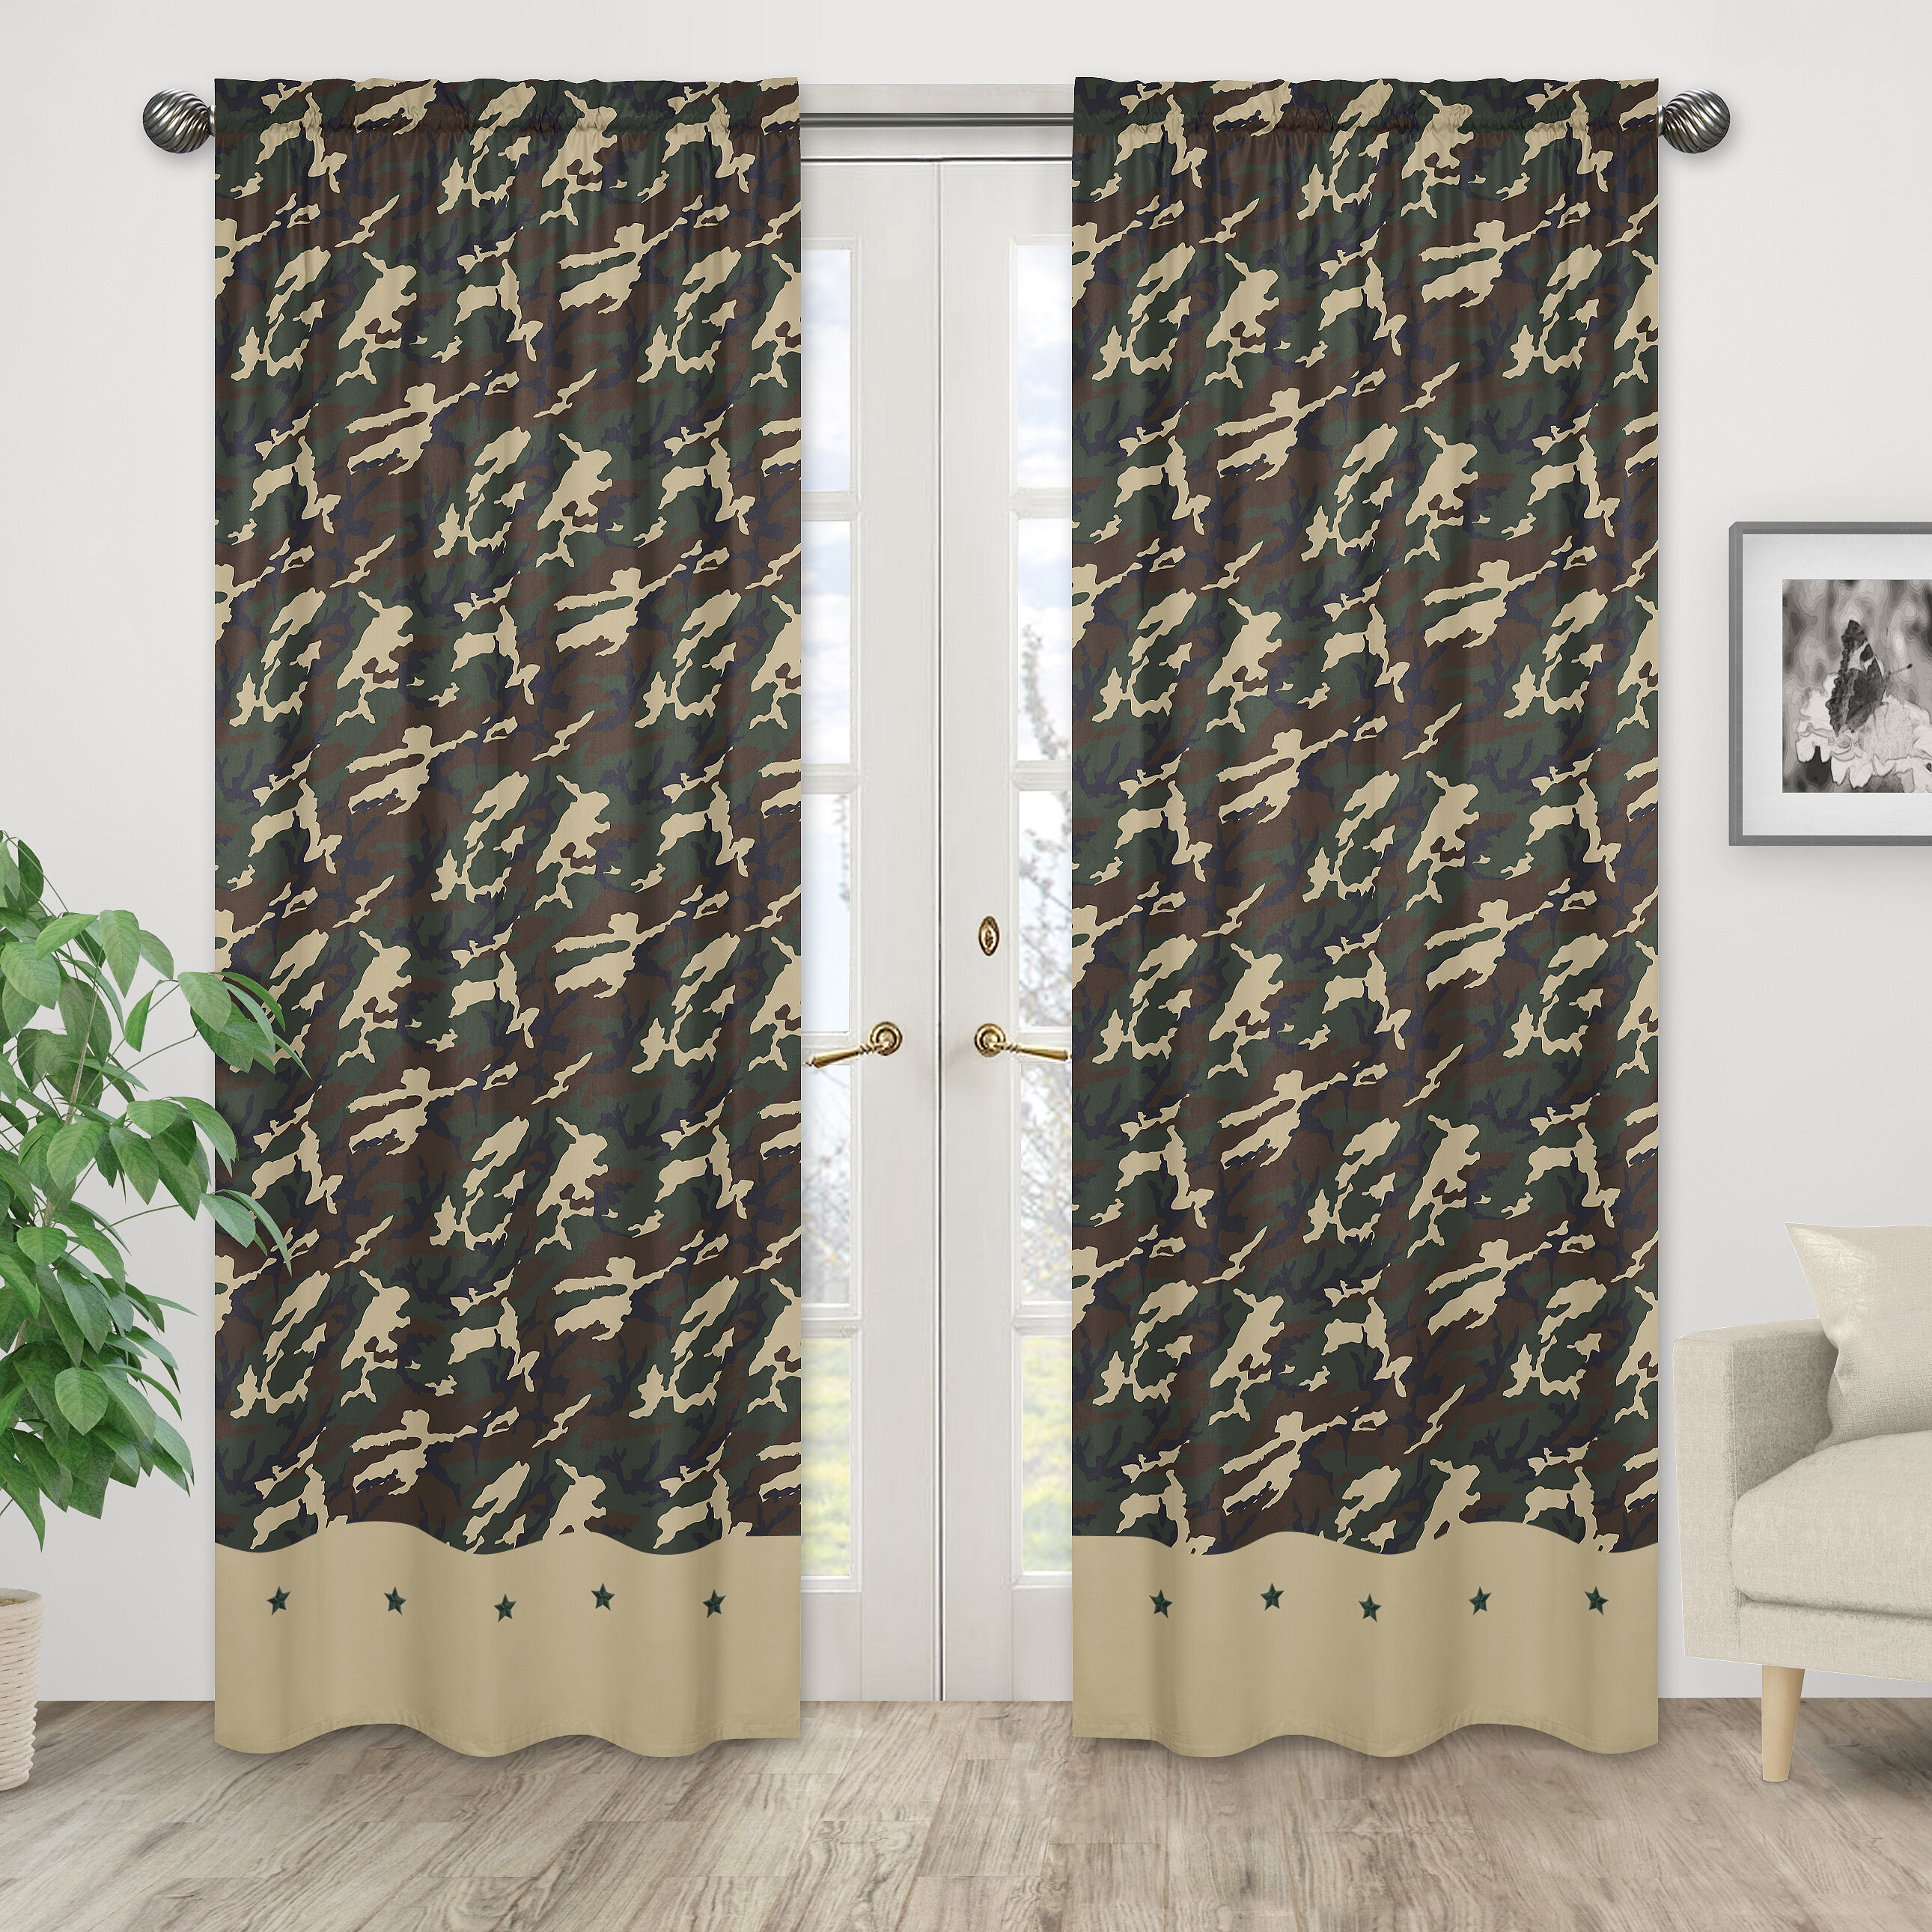 Sweet Jojo Designs Camo Camouflage Semi Sheer Rod Pocket Curtain Panels Reviews Wayfair